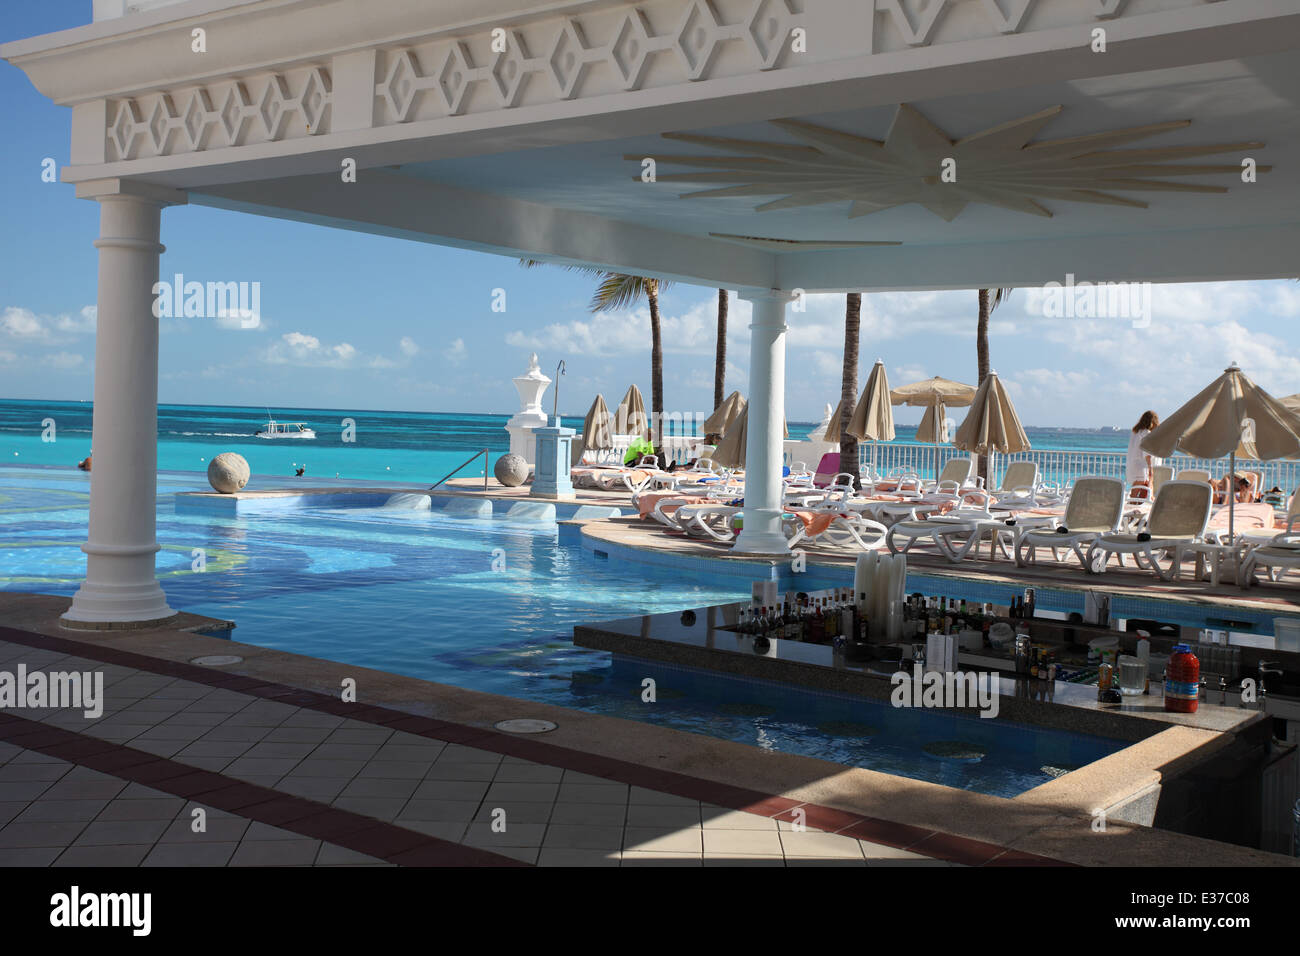 Swim up bar at Hotel Riu Palace Las Americas, Cancun, Yucatan Peninsula, Mexico Stock Photo